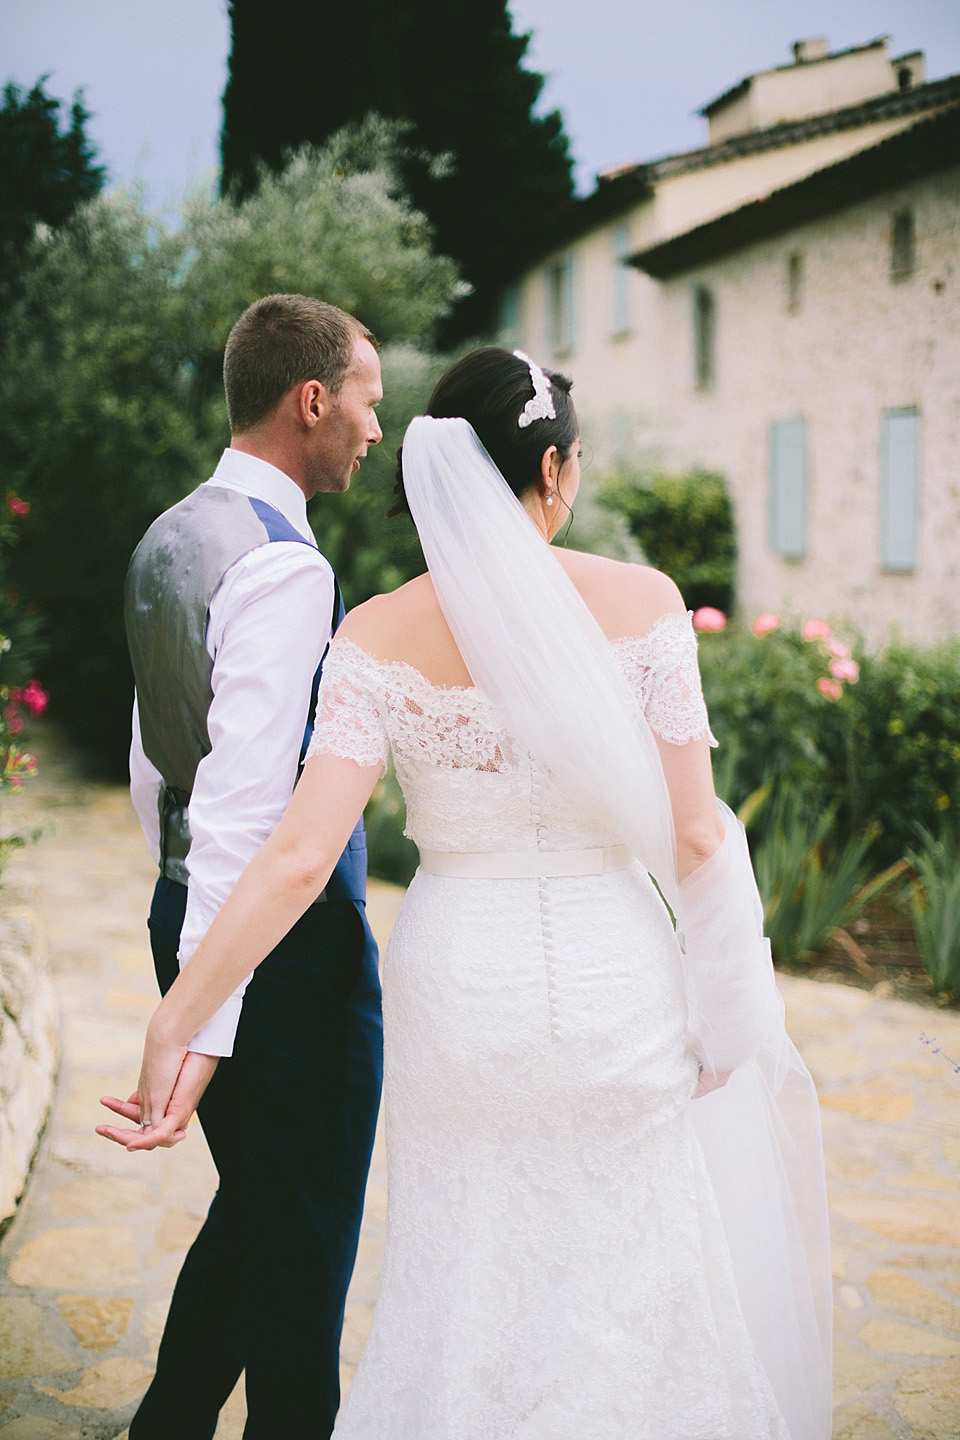 stewart parvin wedding dress, weddings in france, provence wedding